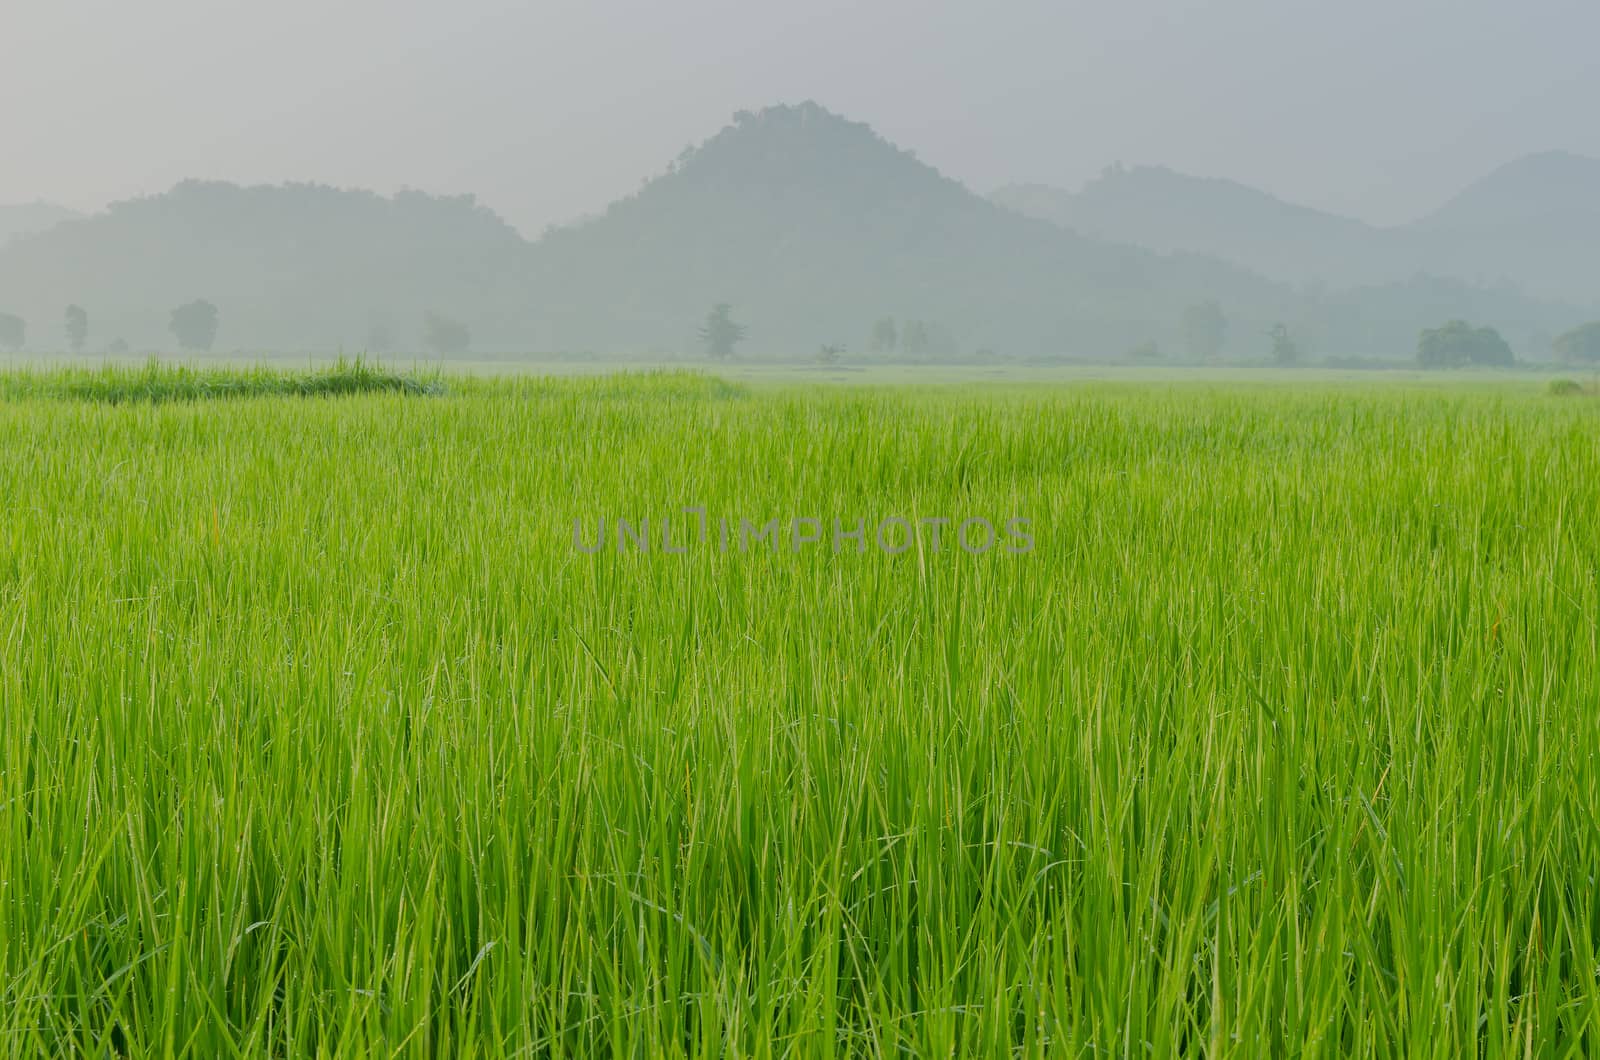 The scene of green rice field near big mountain